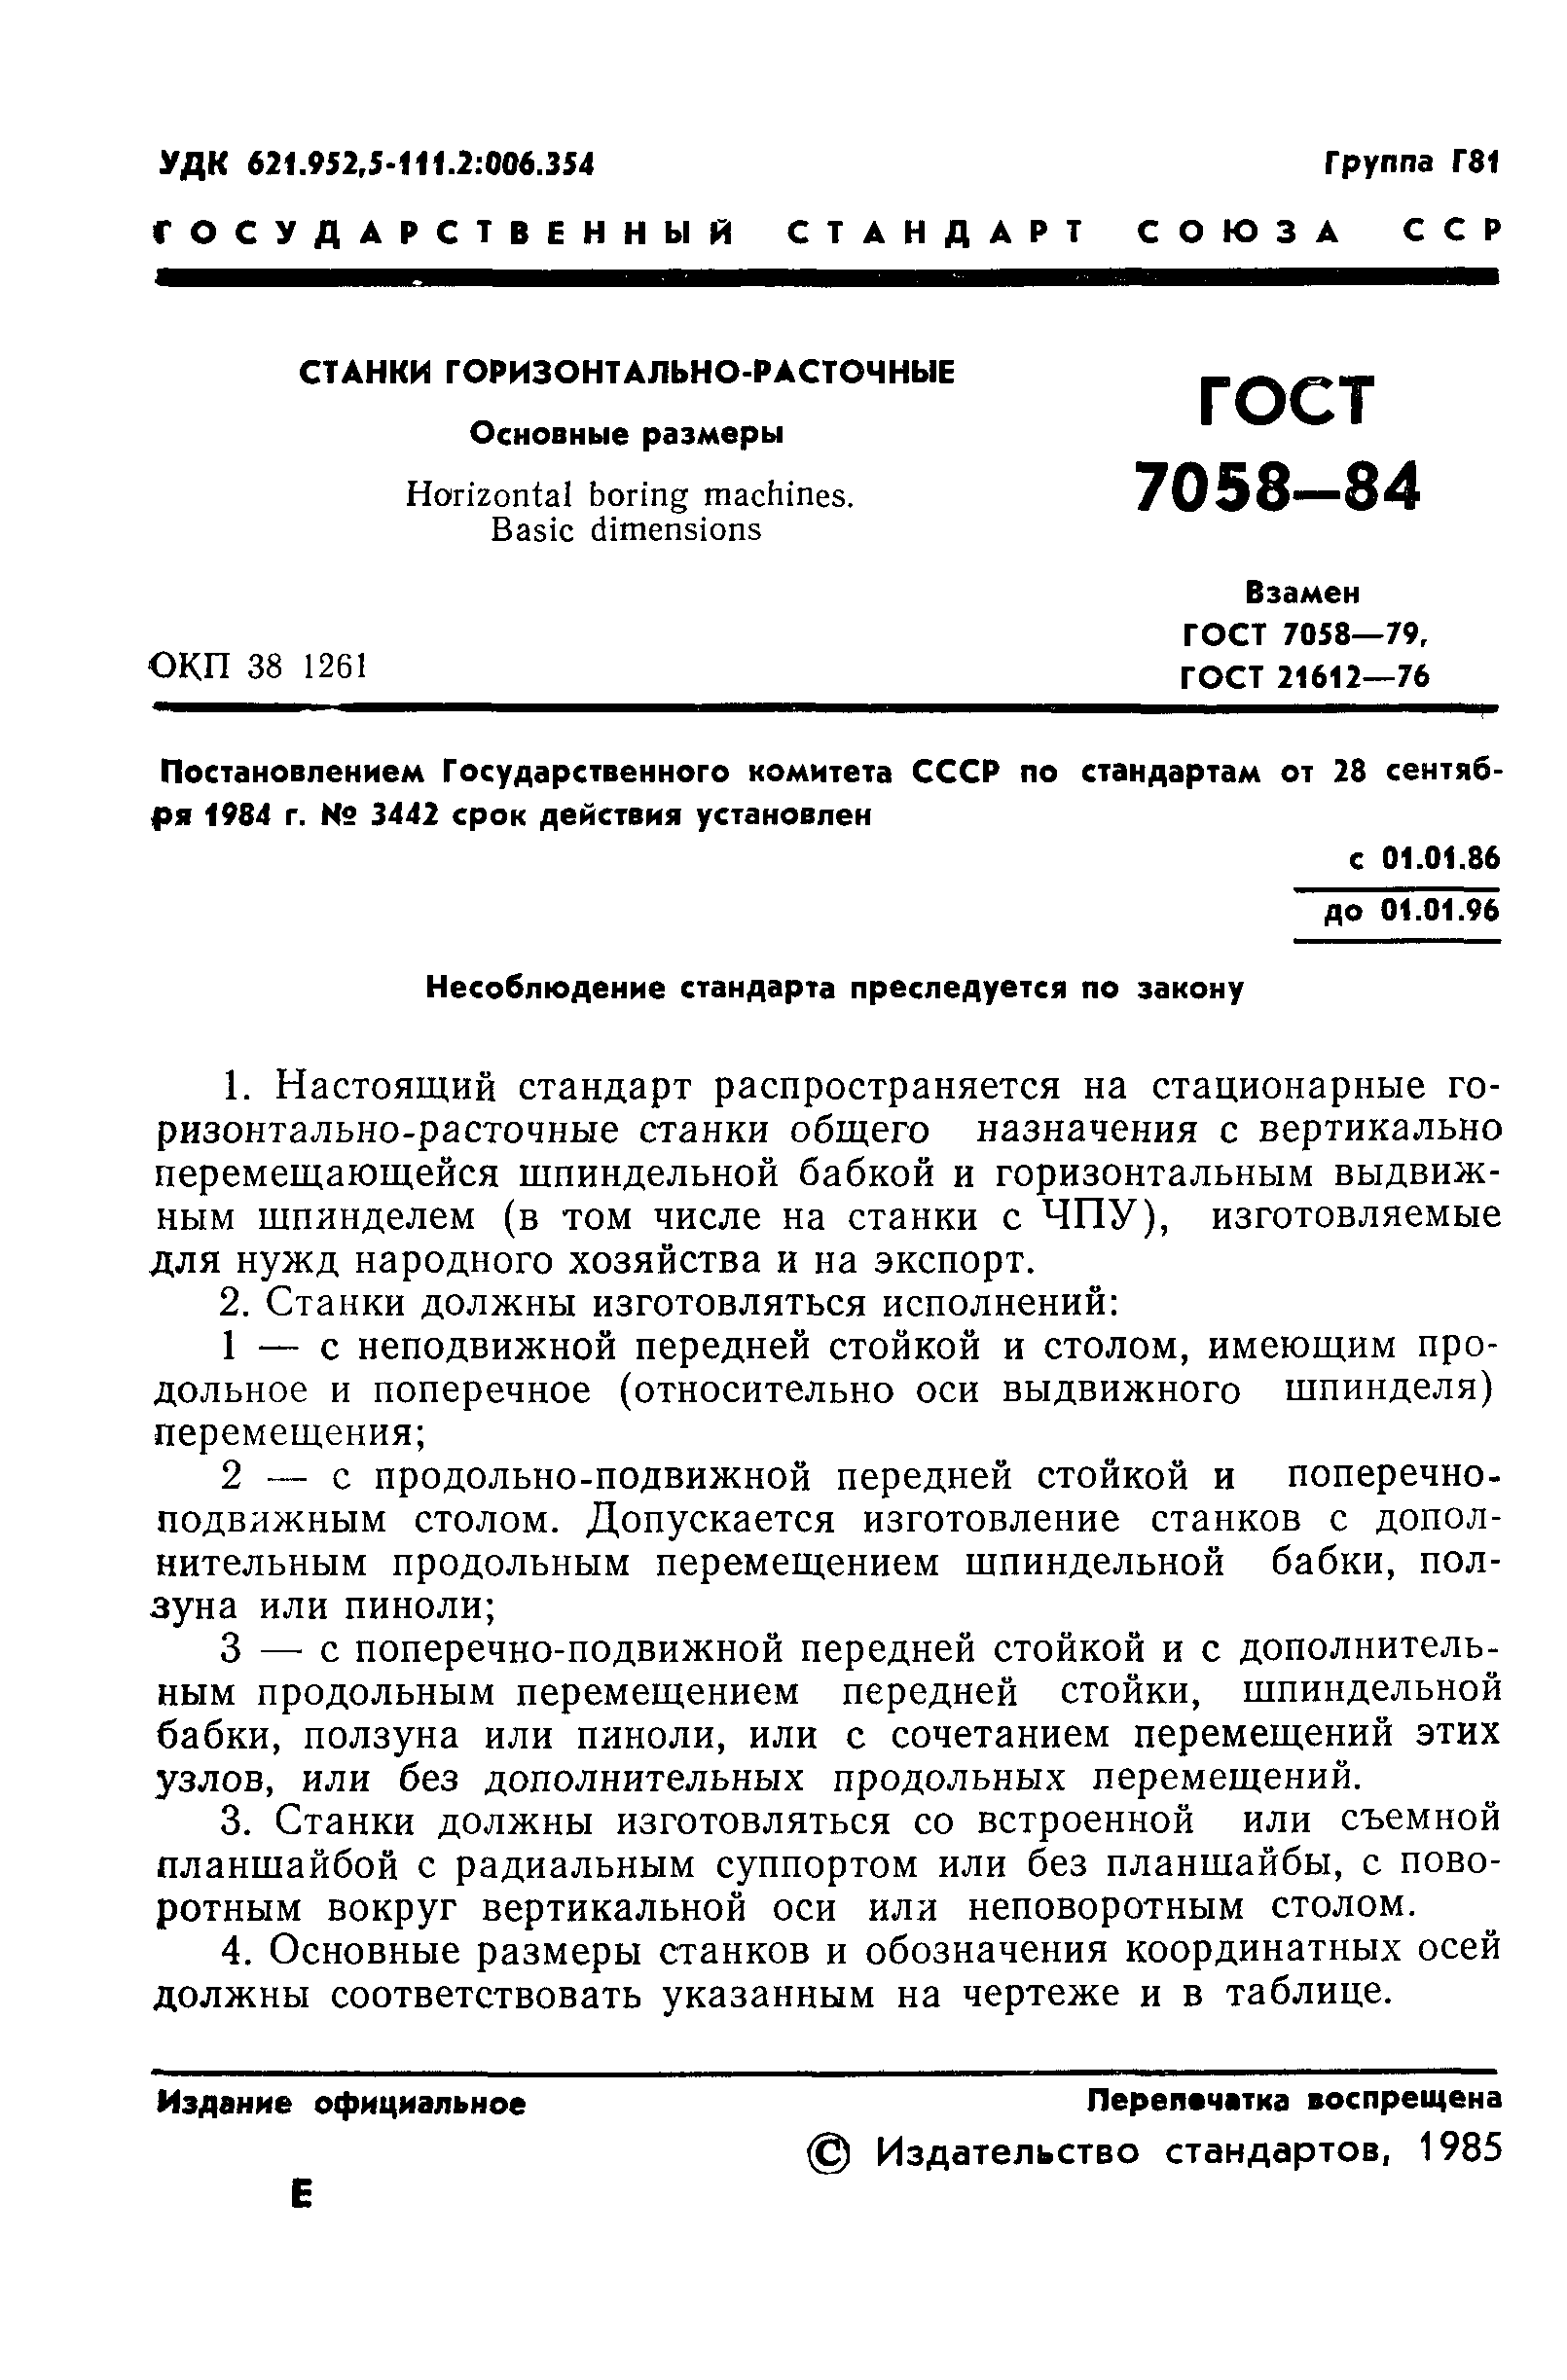 ГОСТ 7058-84